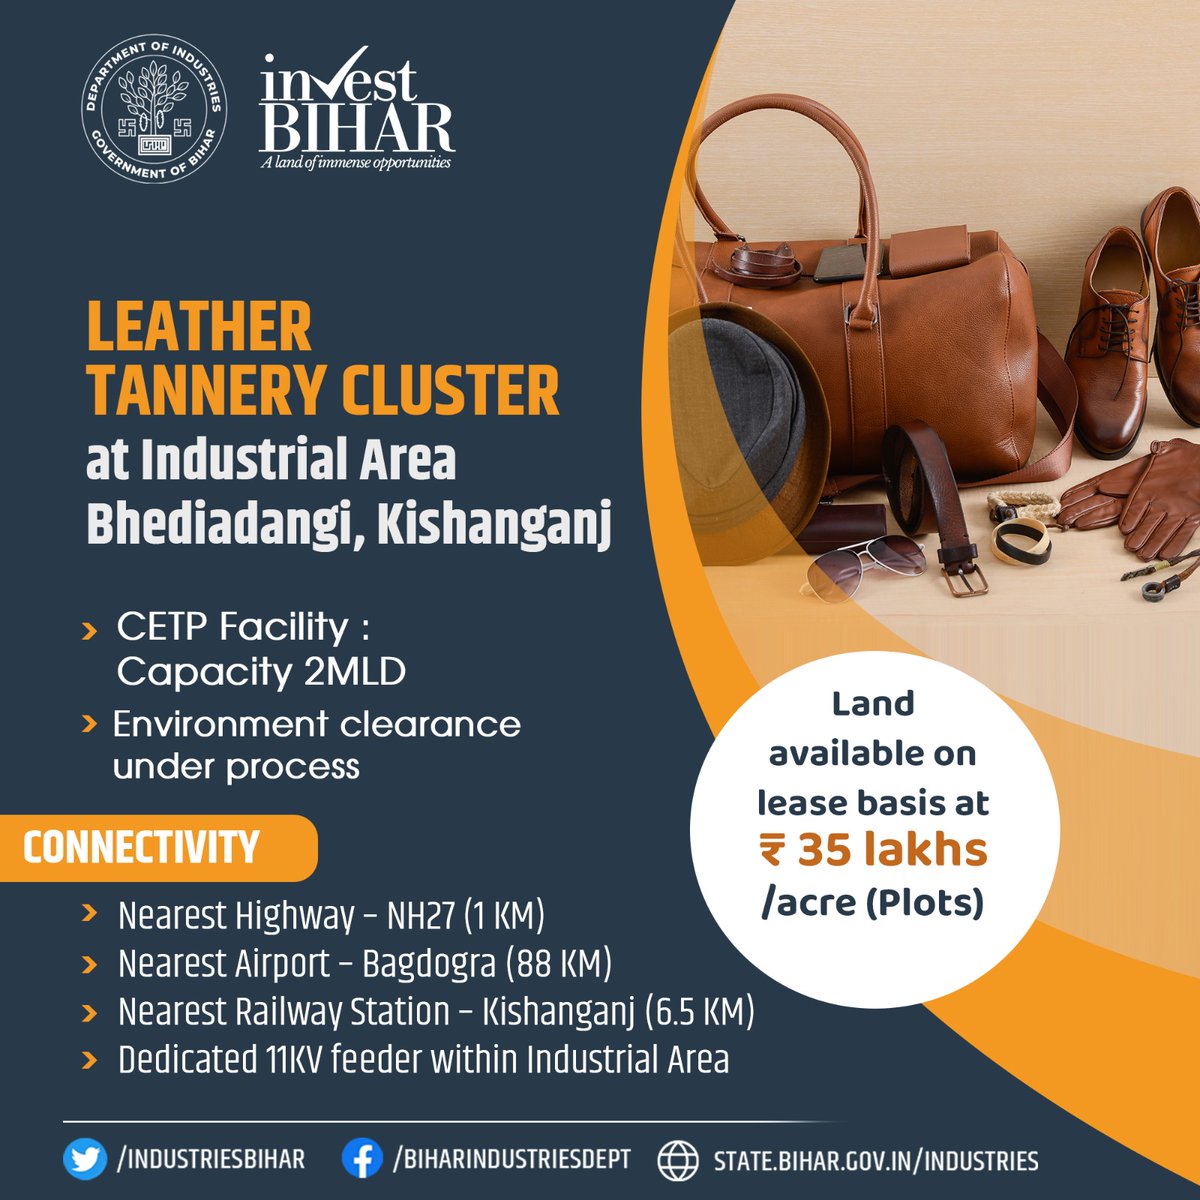 #Bihar, Opportunities like nowhere else. Leather tannery cluster,land available on lease. #IndustriesBihar #BIHARHAITAIYAR #InvestInBihar @SandeepPoundrik @BIADAbihar